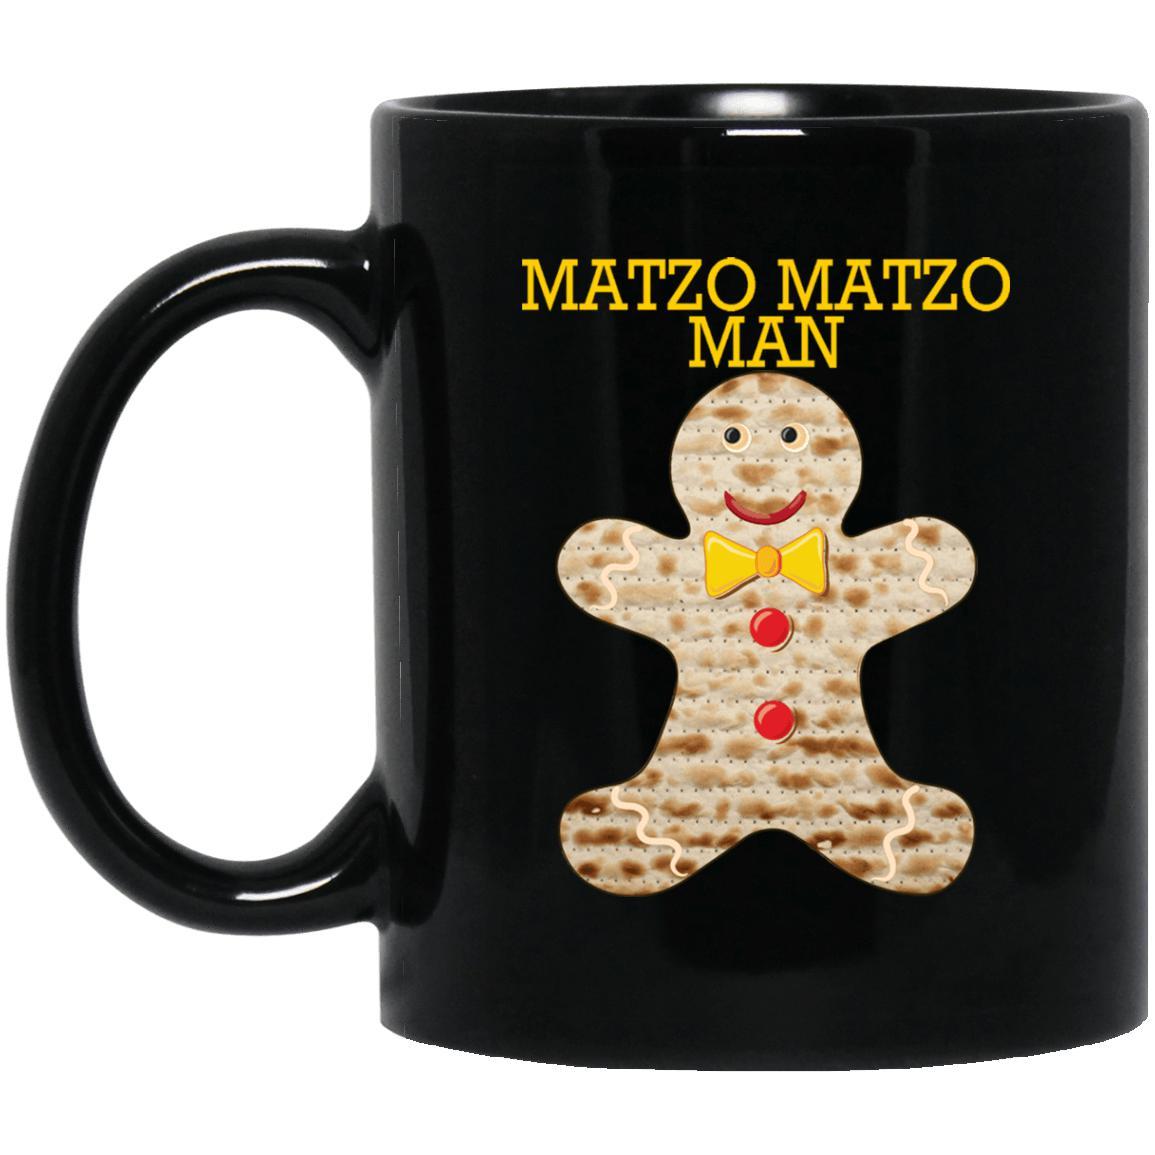 Matzo Man Mugs